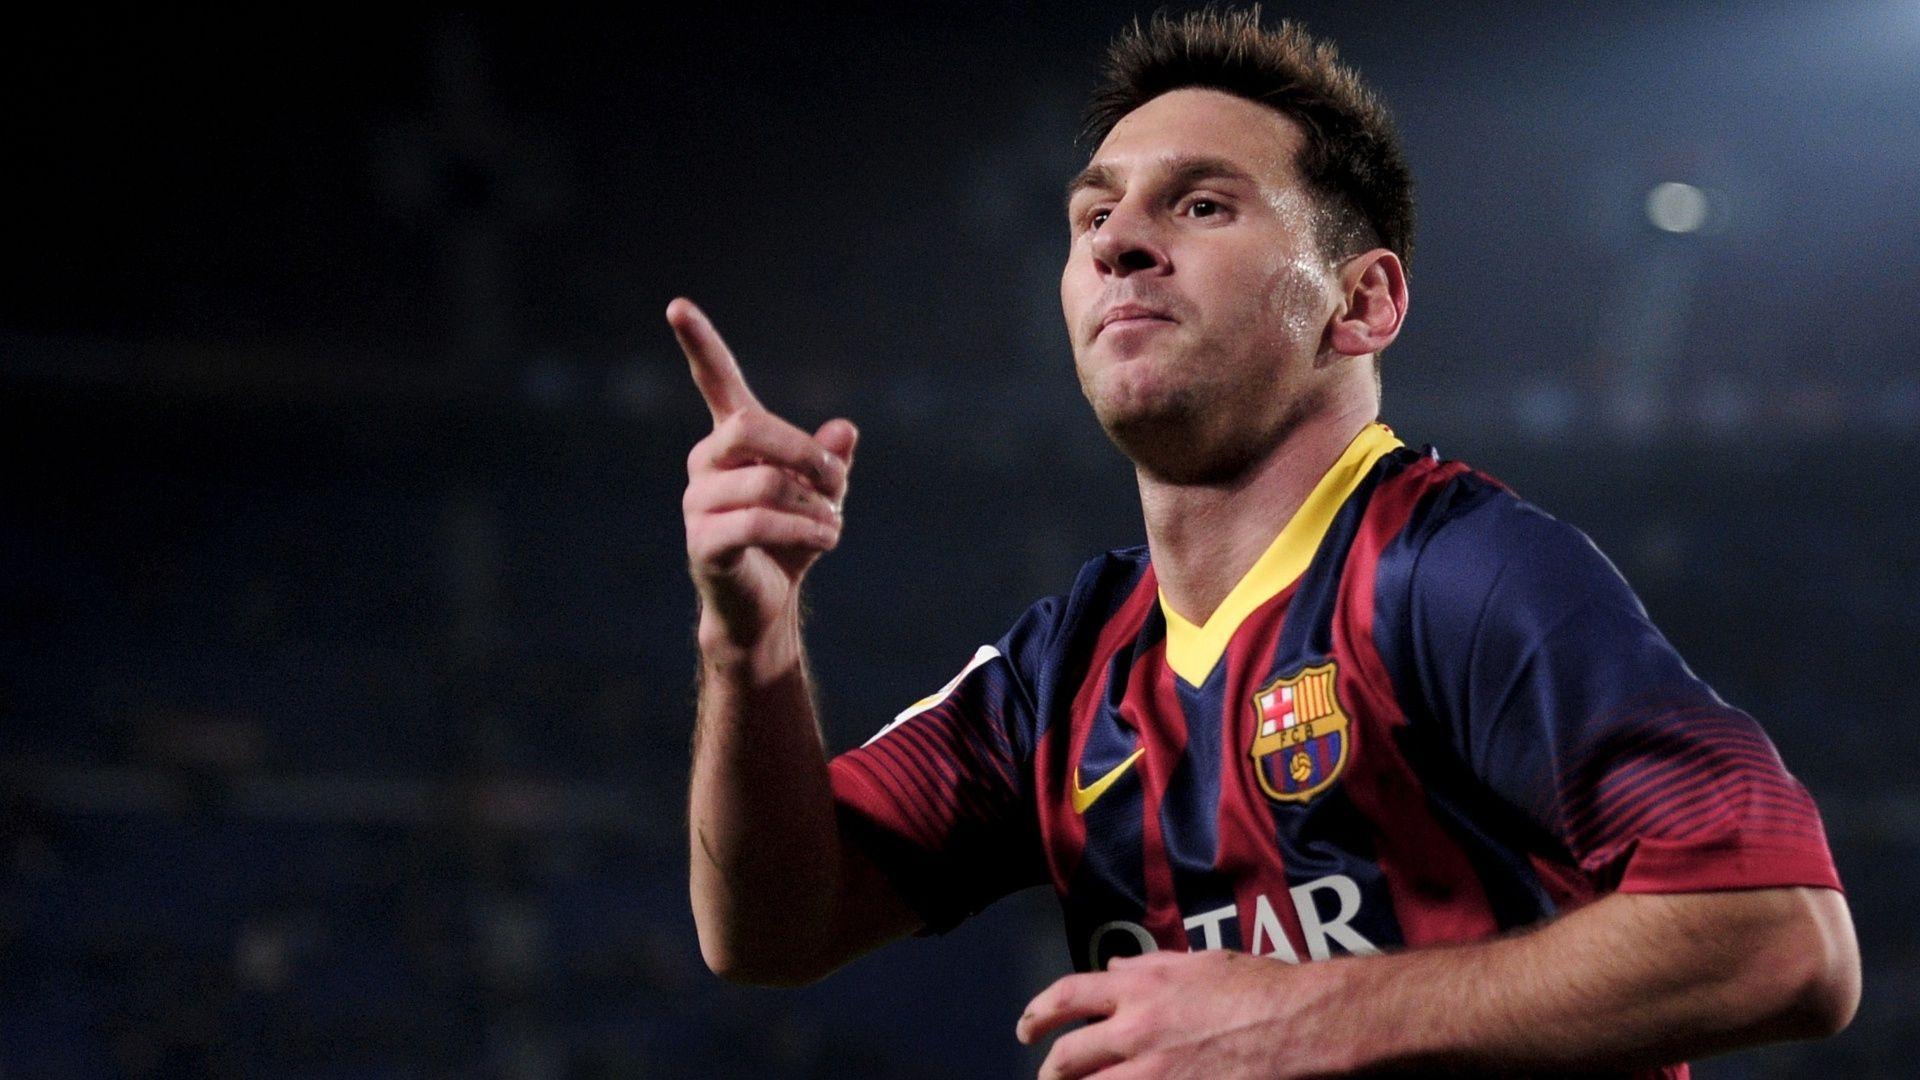 Lionel Messi HD wallpaper free download